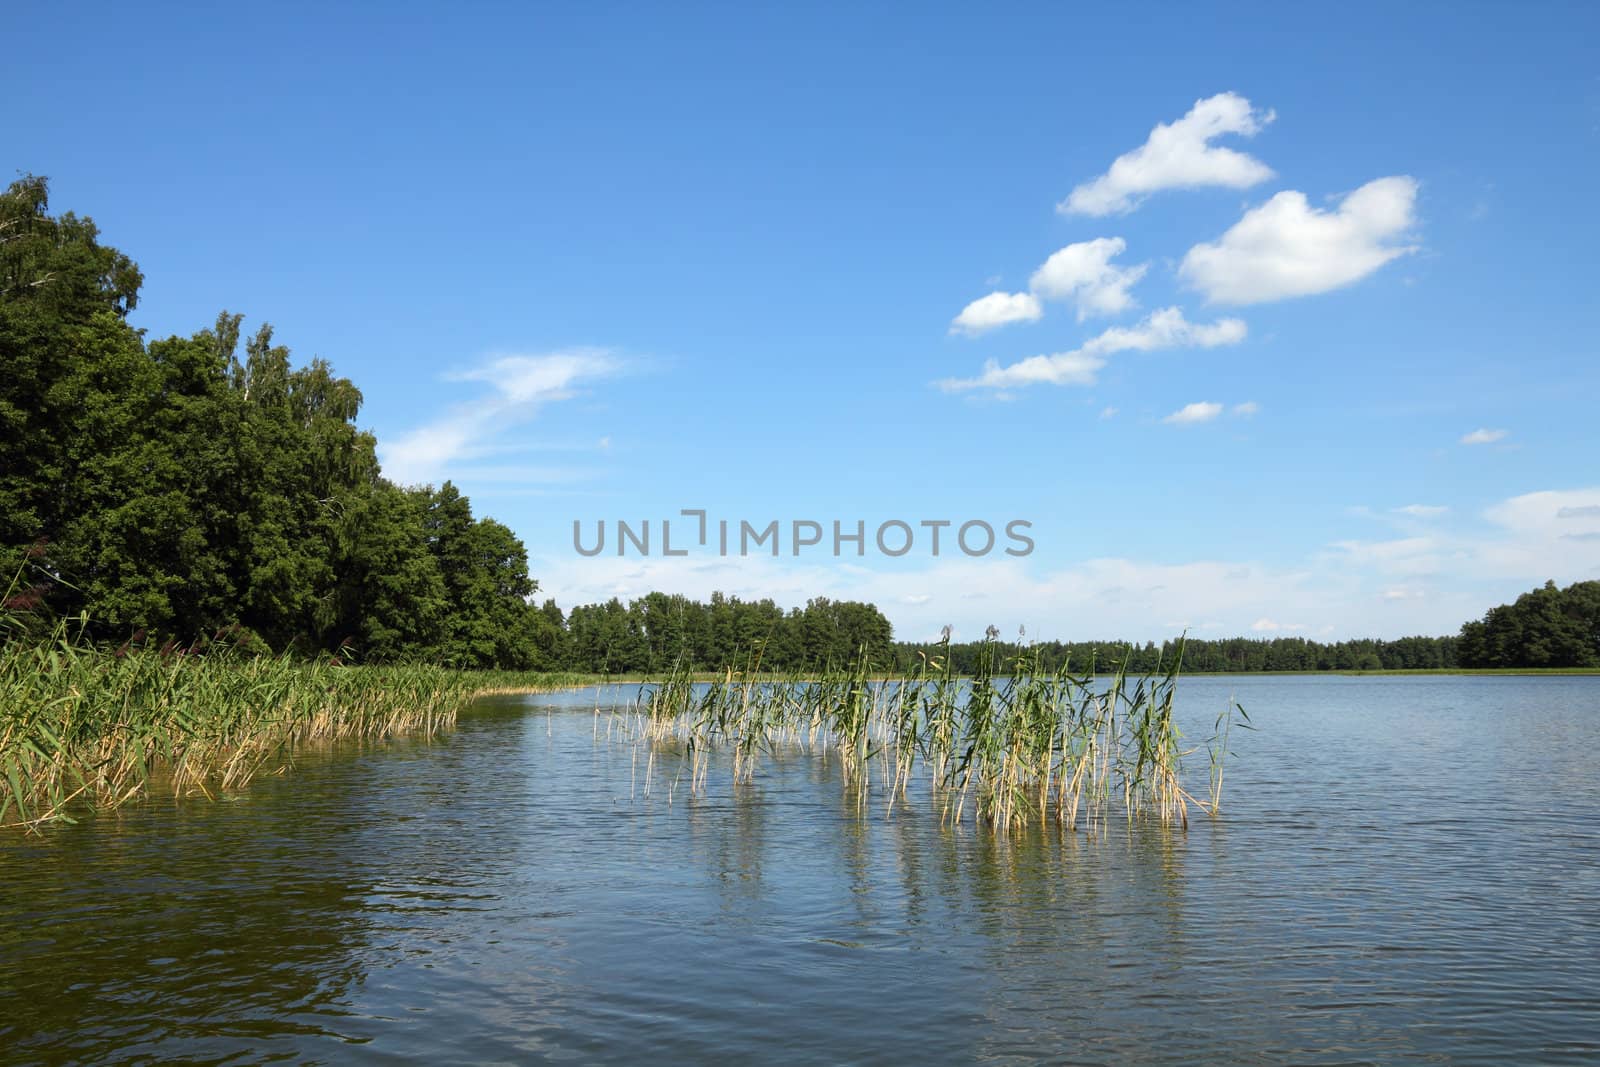 Masuria (Mazury) - famous lake district in Poland. Summer landscape in Europe. Wydminskie lake.